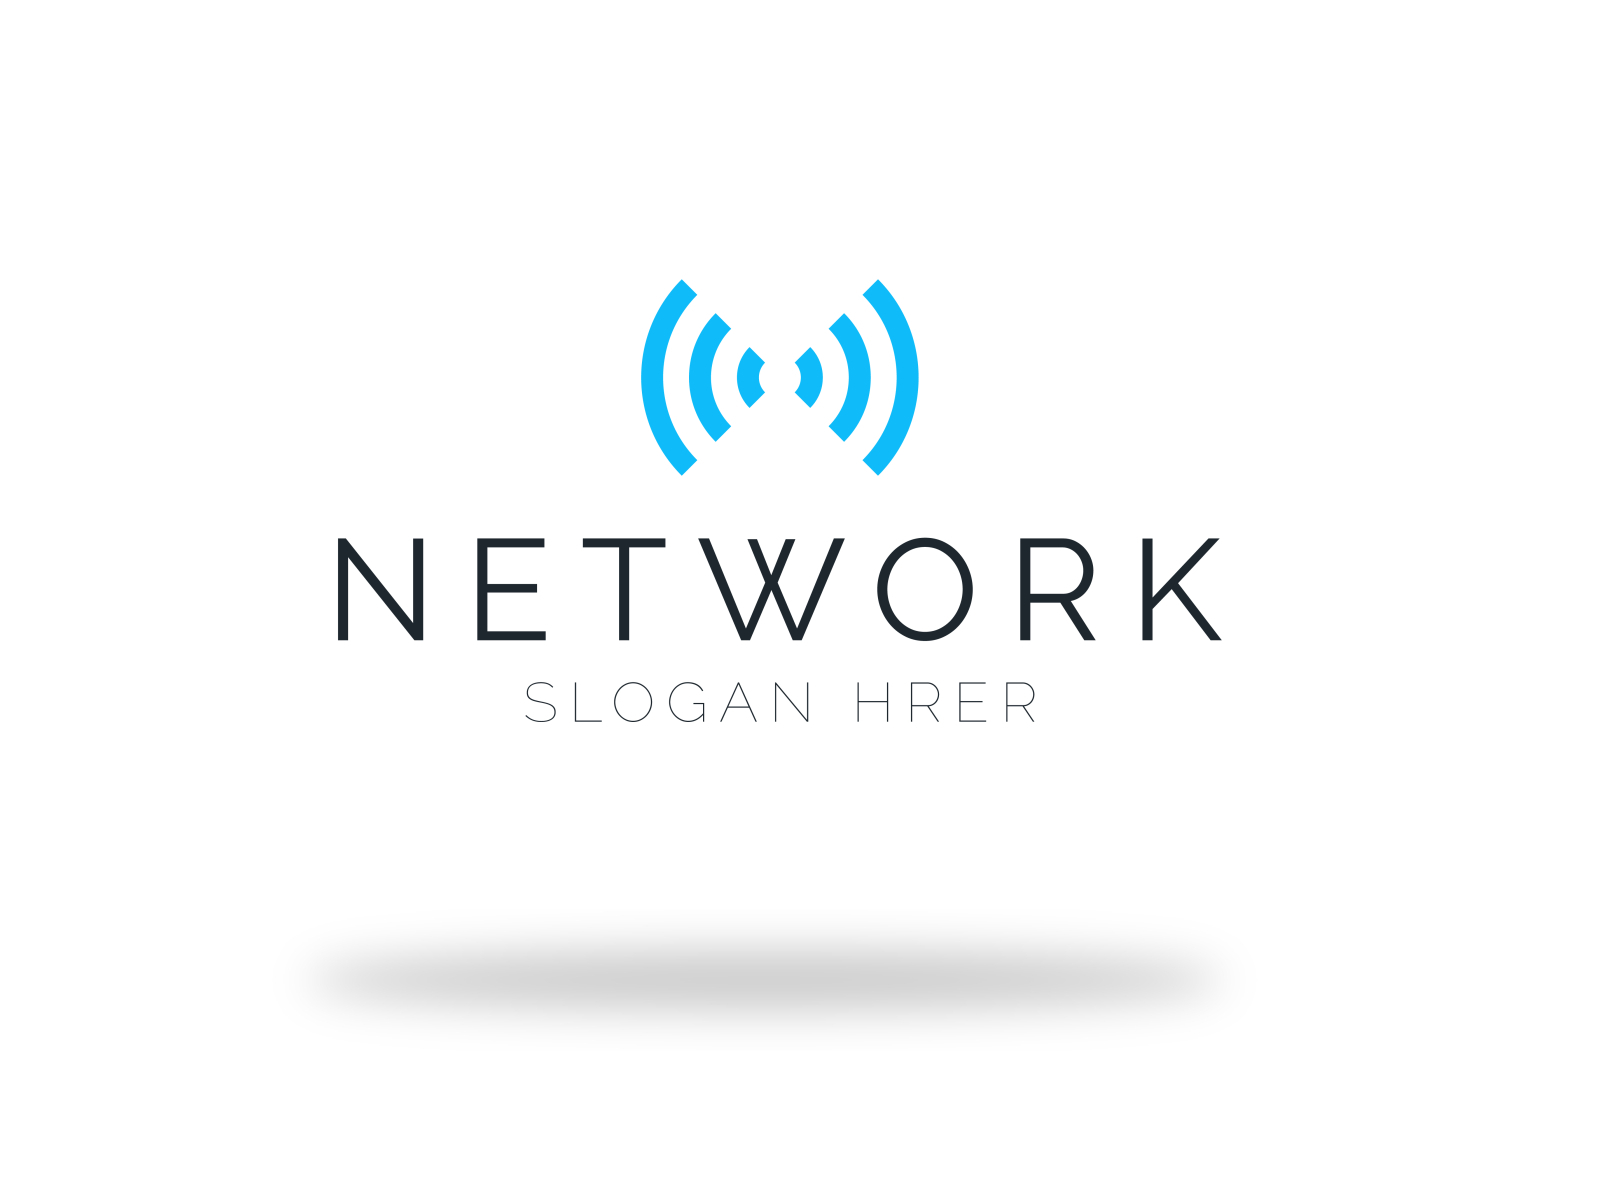 networking logo design